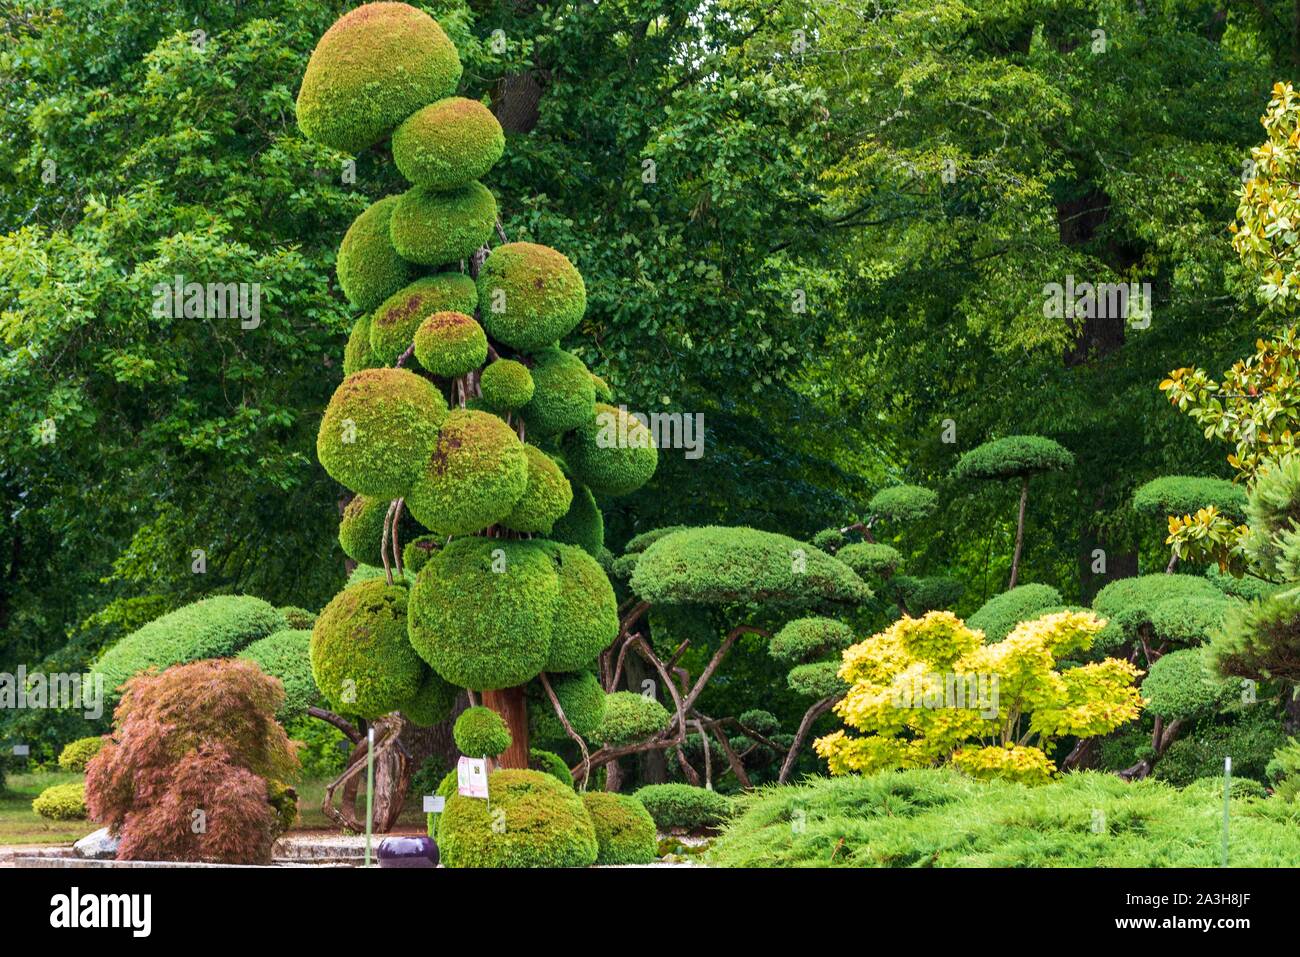 France, Loiret, Orleans, Jardin des plantes (Botanical Gardens), Japanese cryptomeria (Cryptomeria japonica), Japanese Cedar Stock Photo